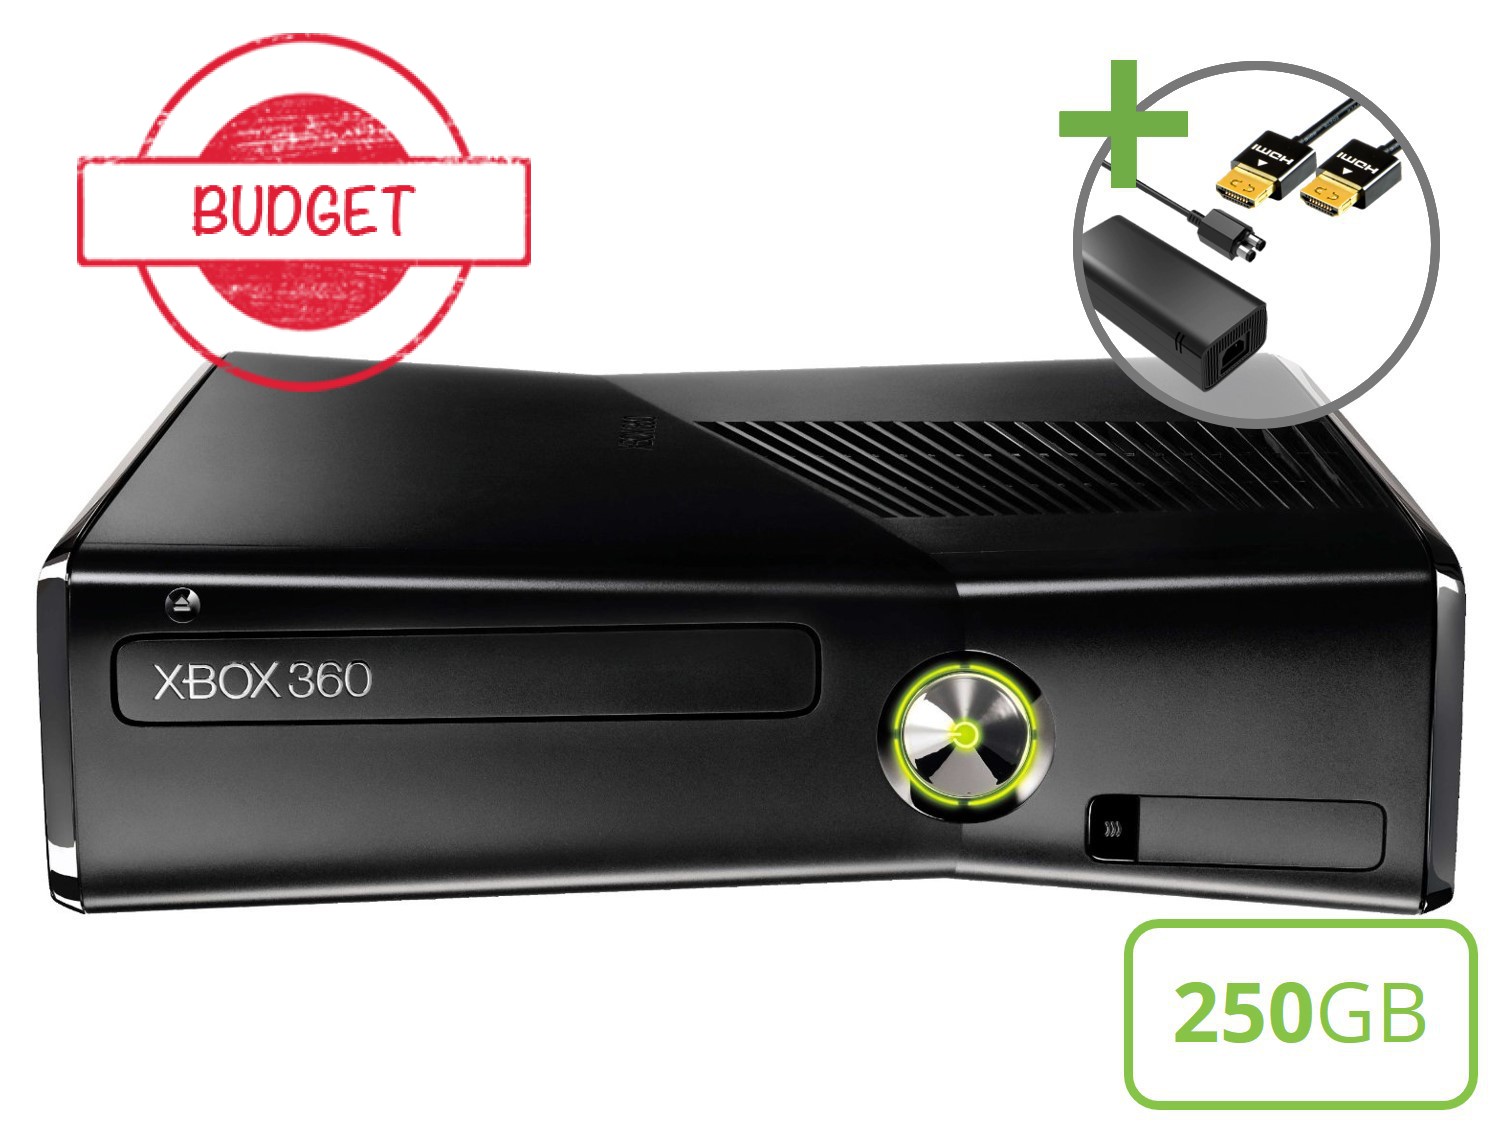 Microsoft Xbox 360 Slim Starter Pack - Forza 3 and Crisis 2 Edition - Budget - Xbox 360 Hardware - 2